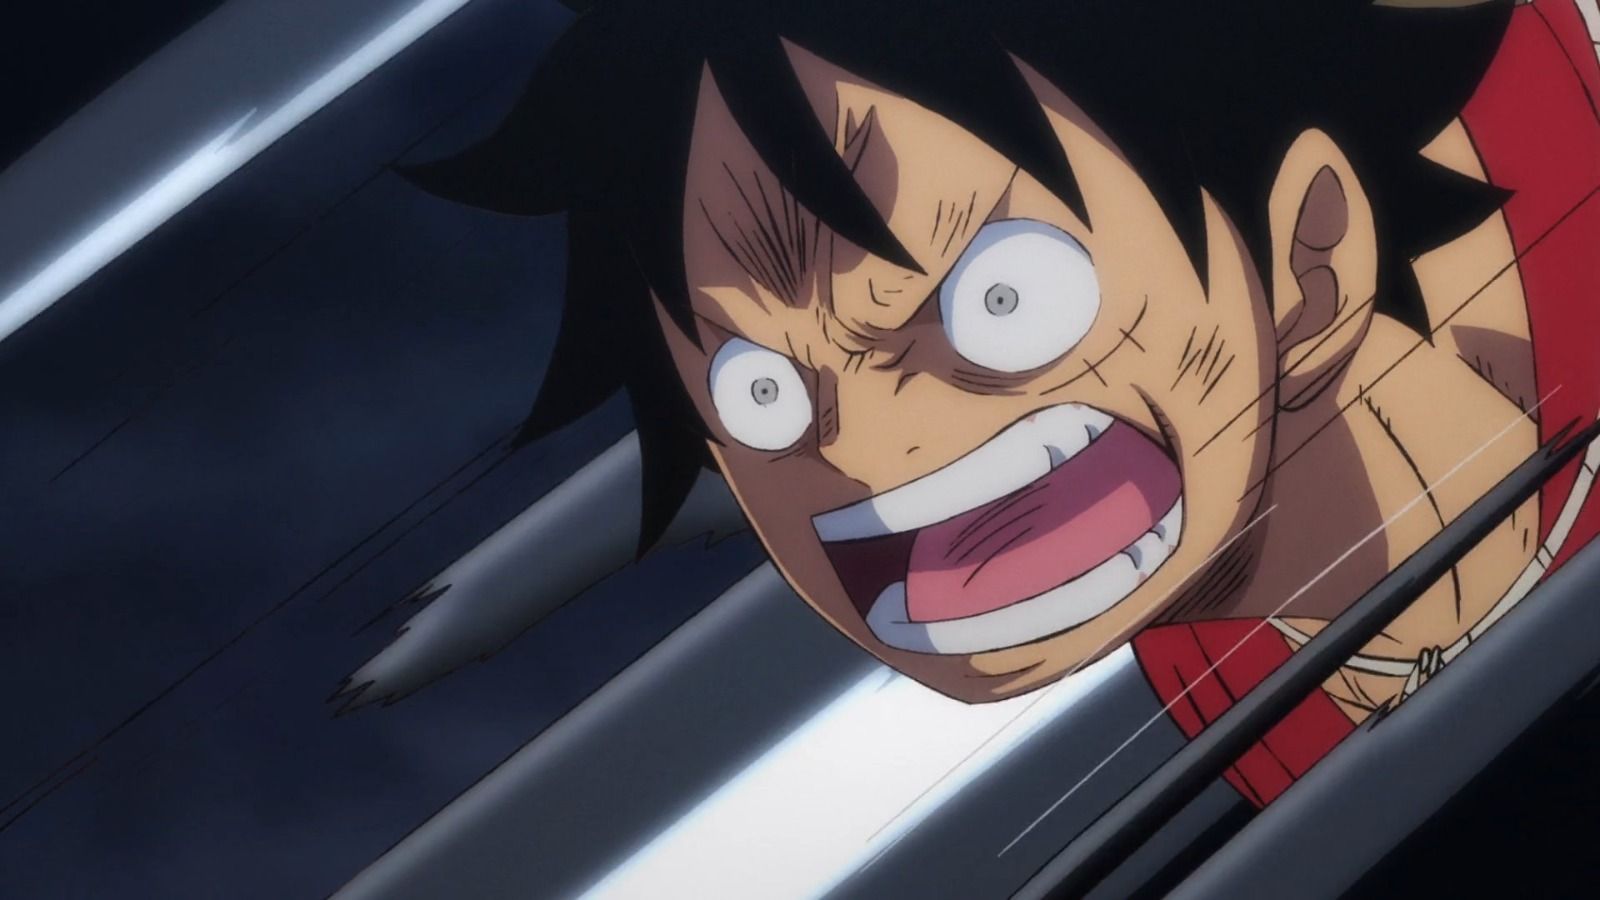 Jadwal Tayang Anime One Piece Episode 1063 Sub Indo, Link Nonton dan Download di iQIYI, VIU, dan Bstation.